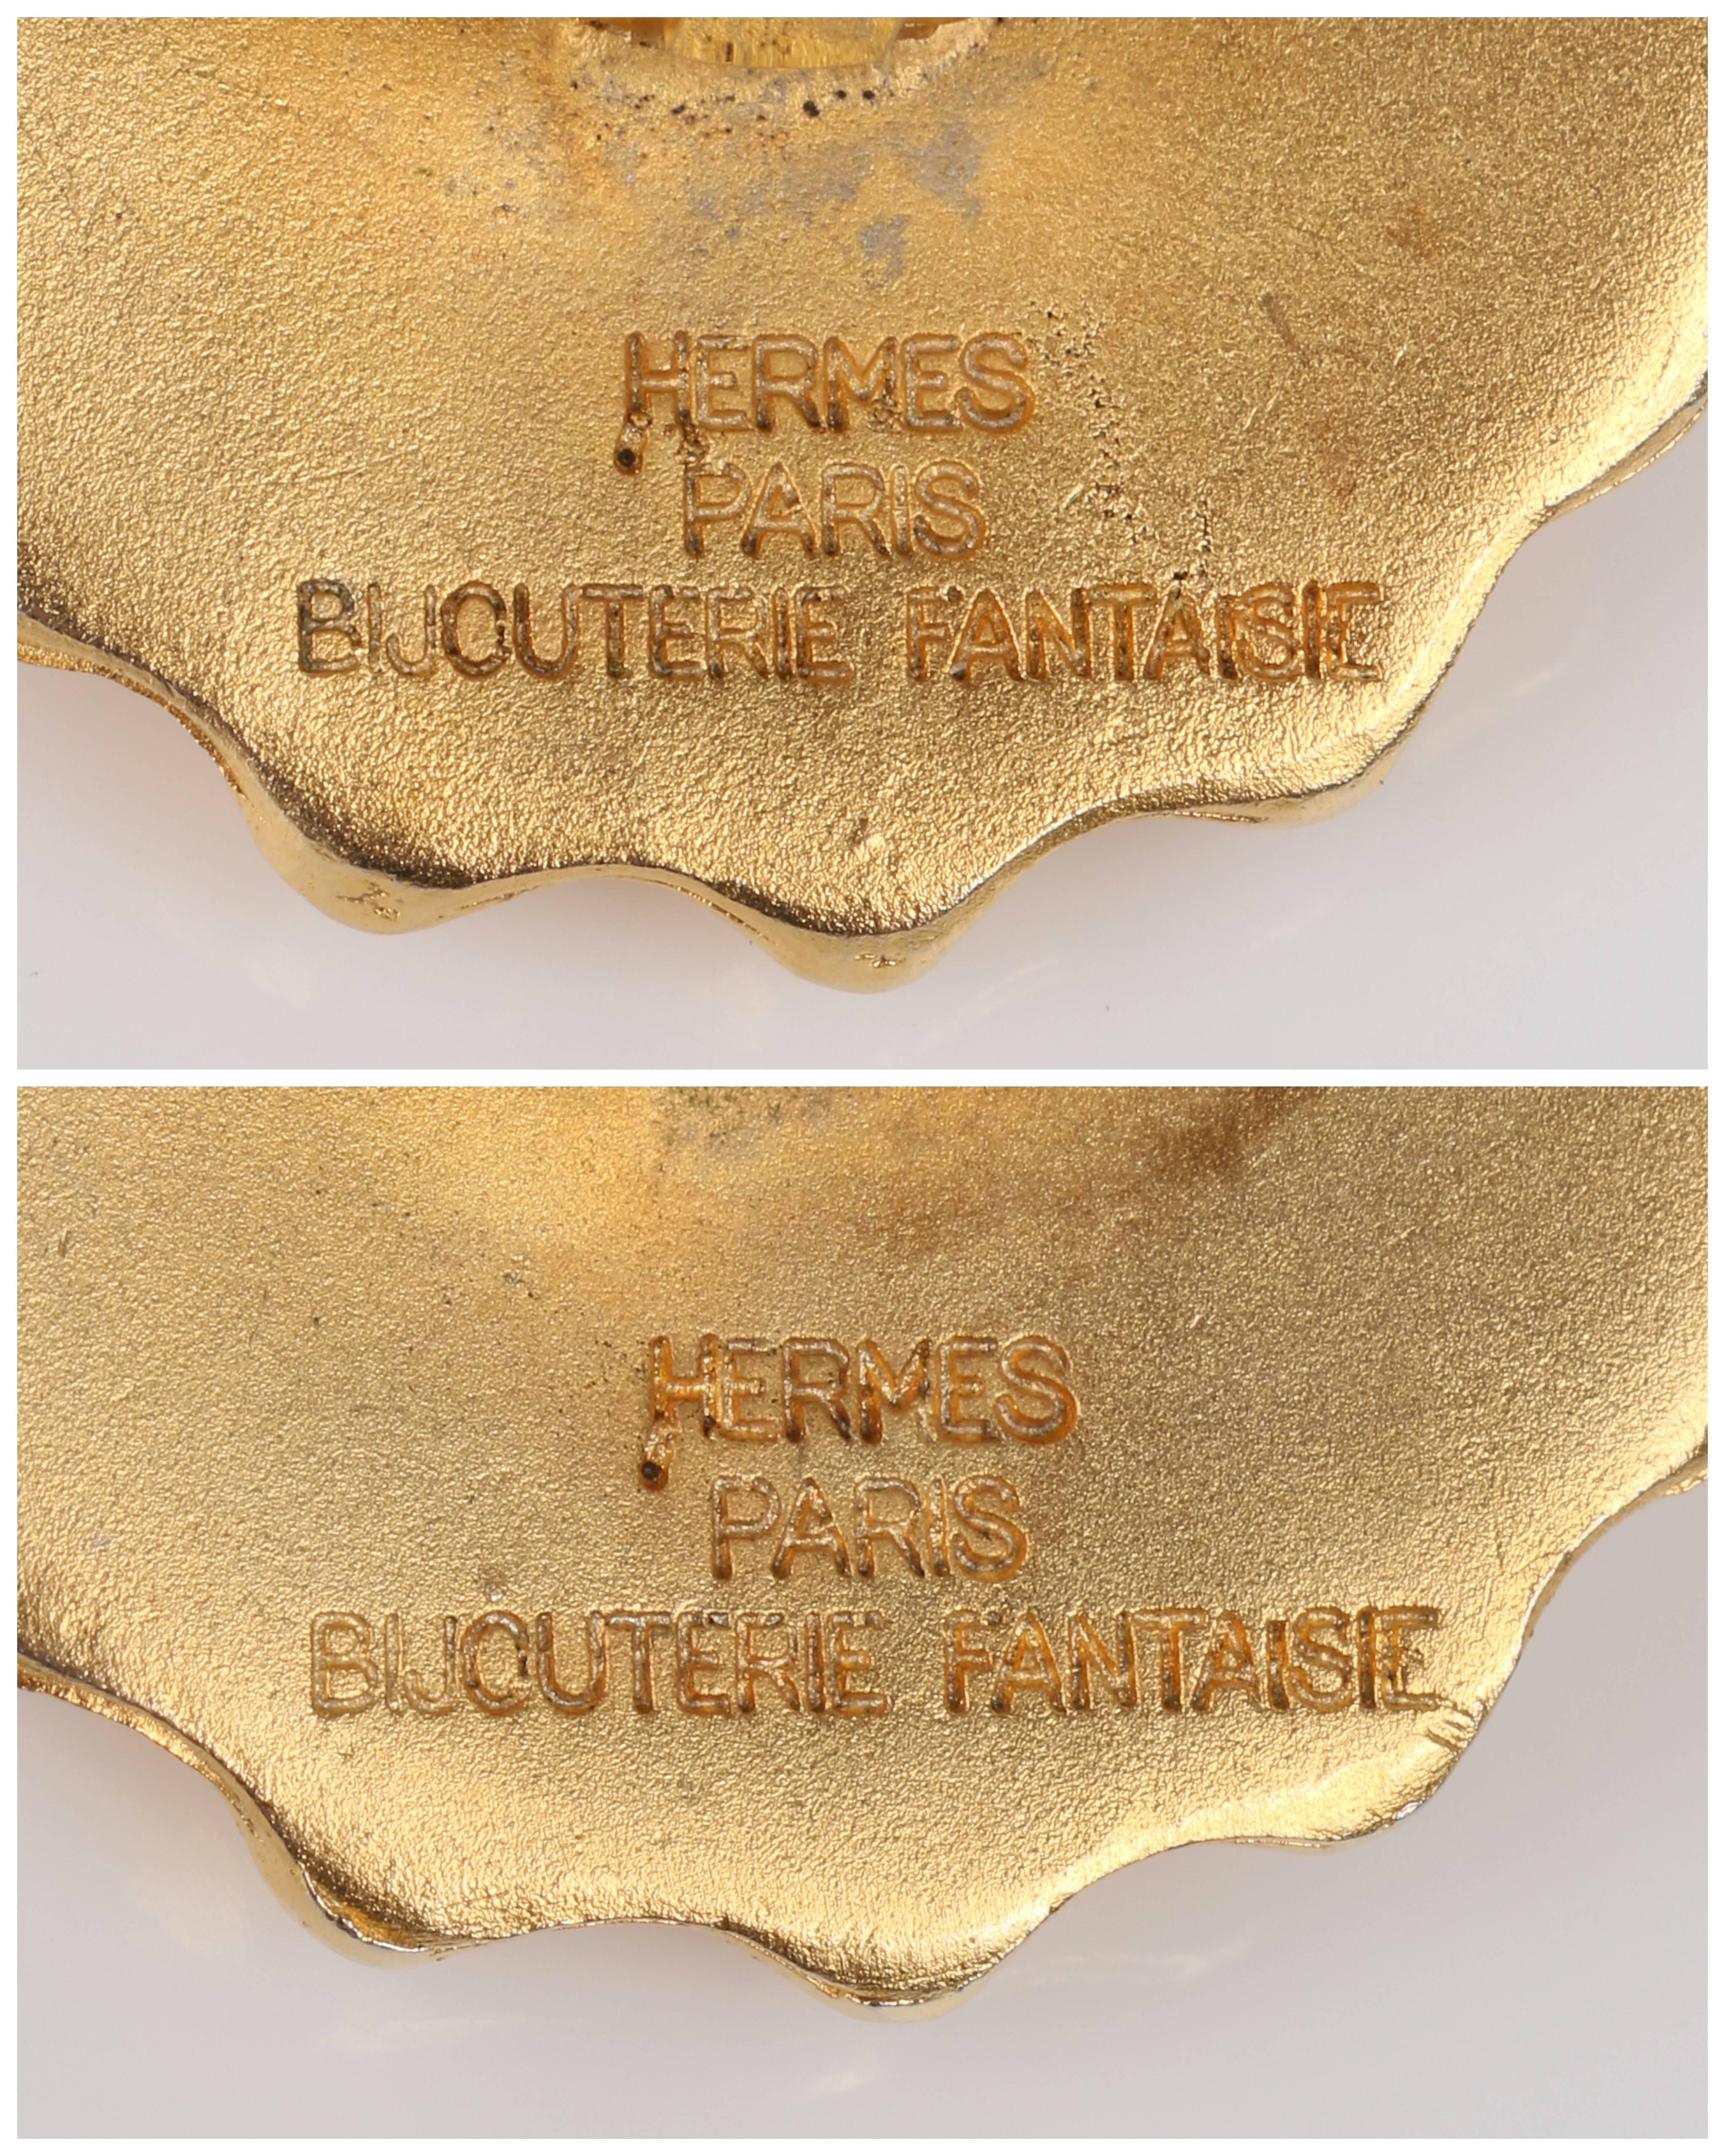 HERMES c.1990's Bijouterie Fantaisie Paris Gold Sun Ray Clip Earrings With Box 2